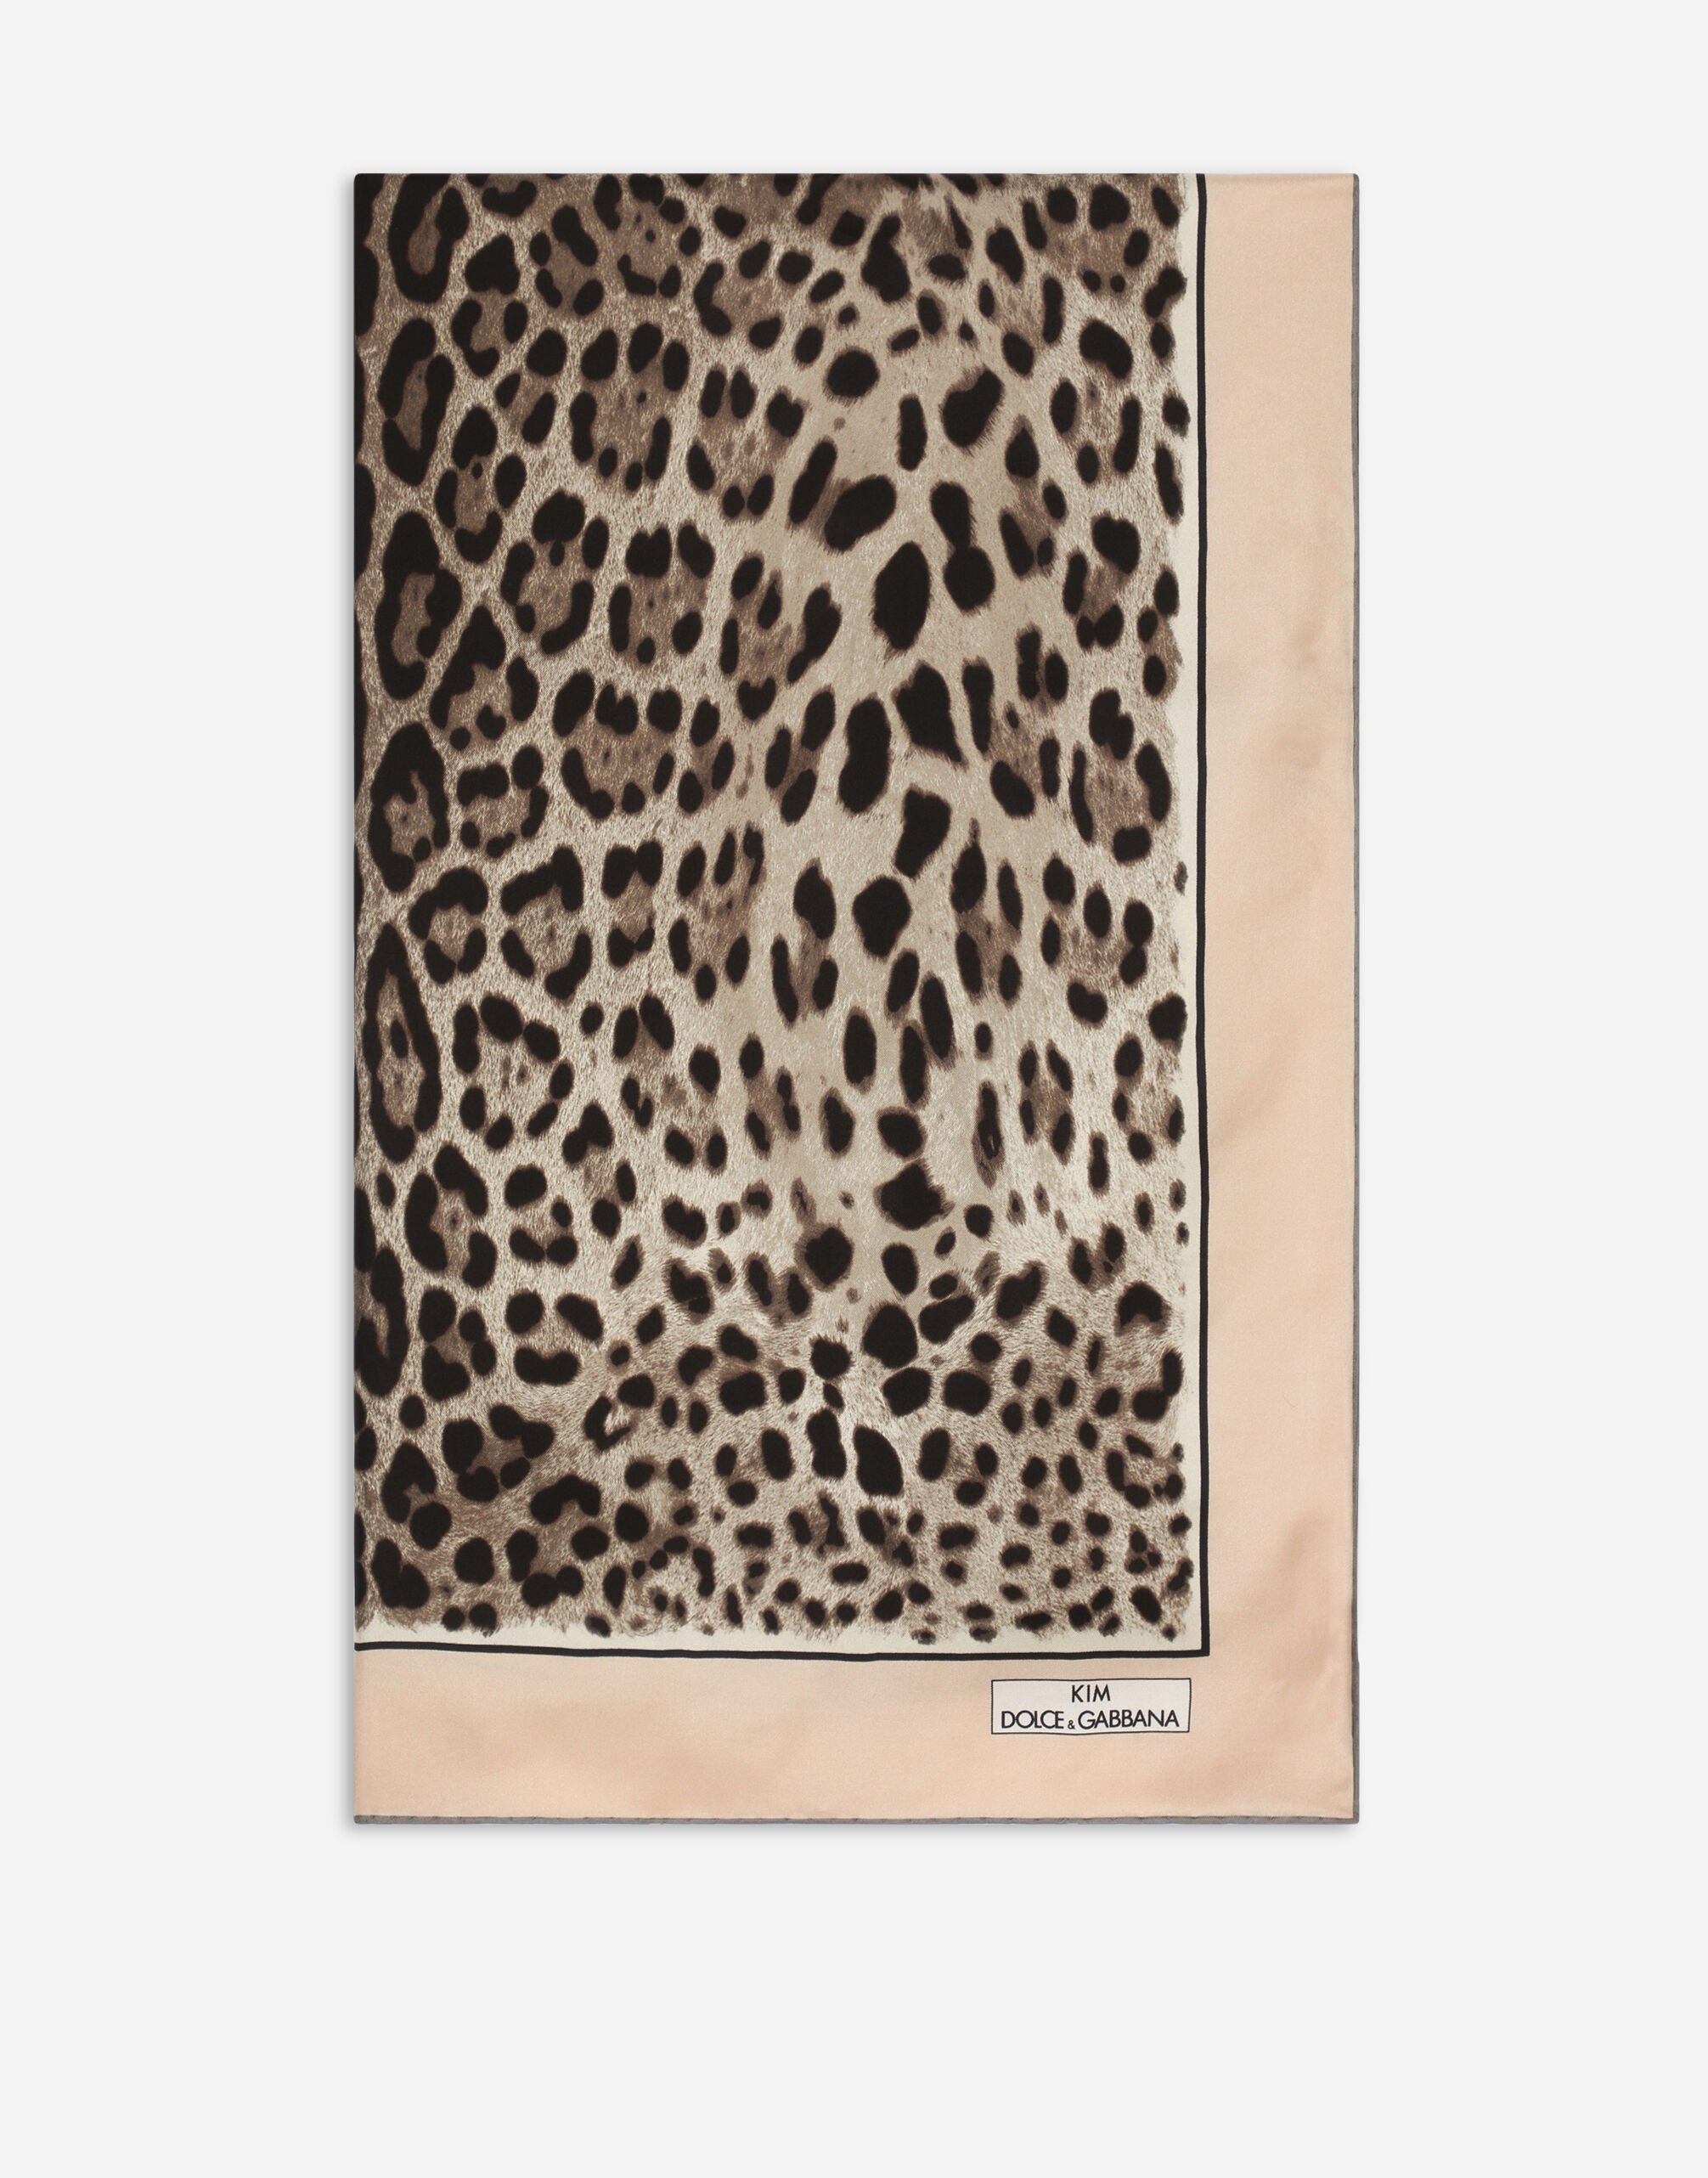 Dolce & Gabbana KIM DOLCE&GABBANA Leopard-print twill scarf (90 x 90) Multicolor FN092RGDAOU